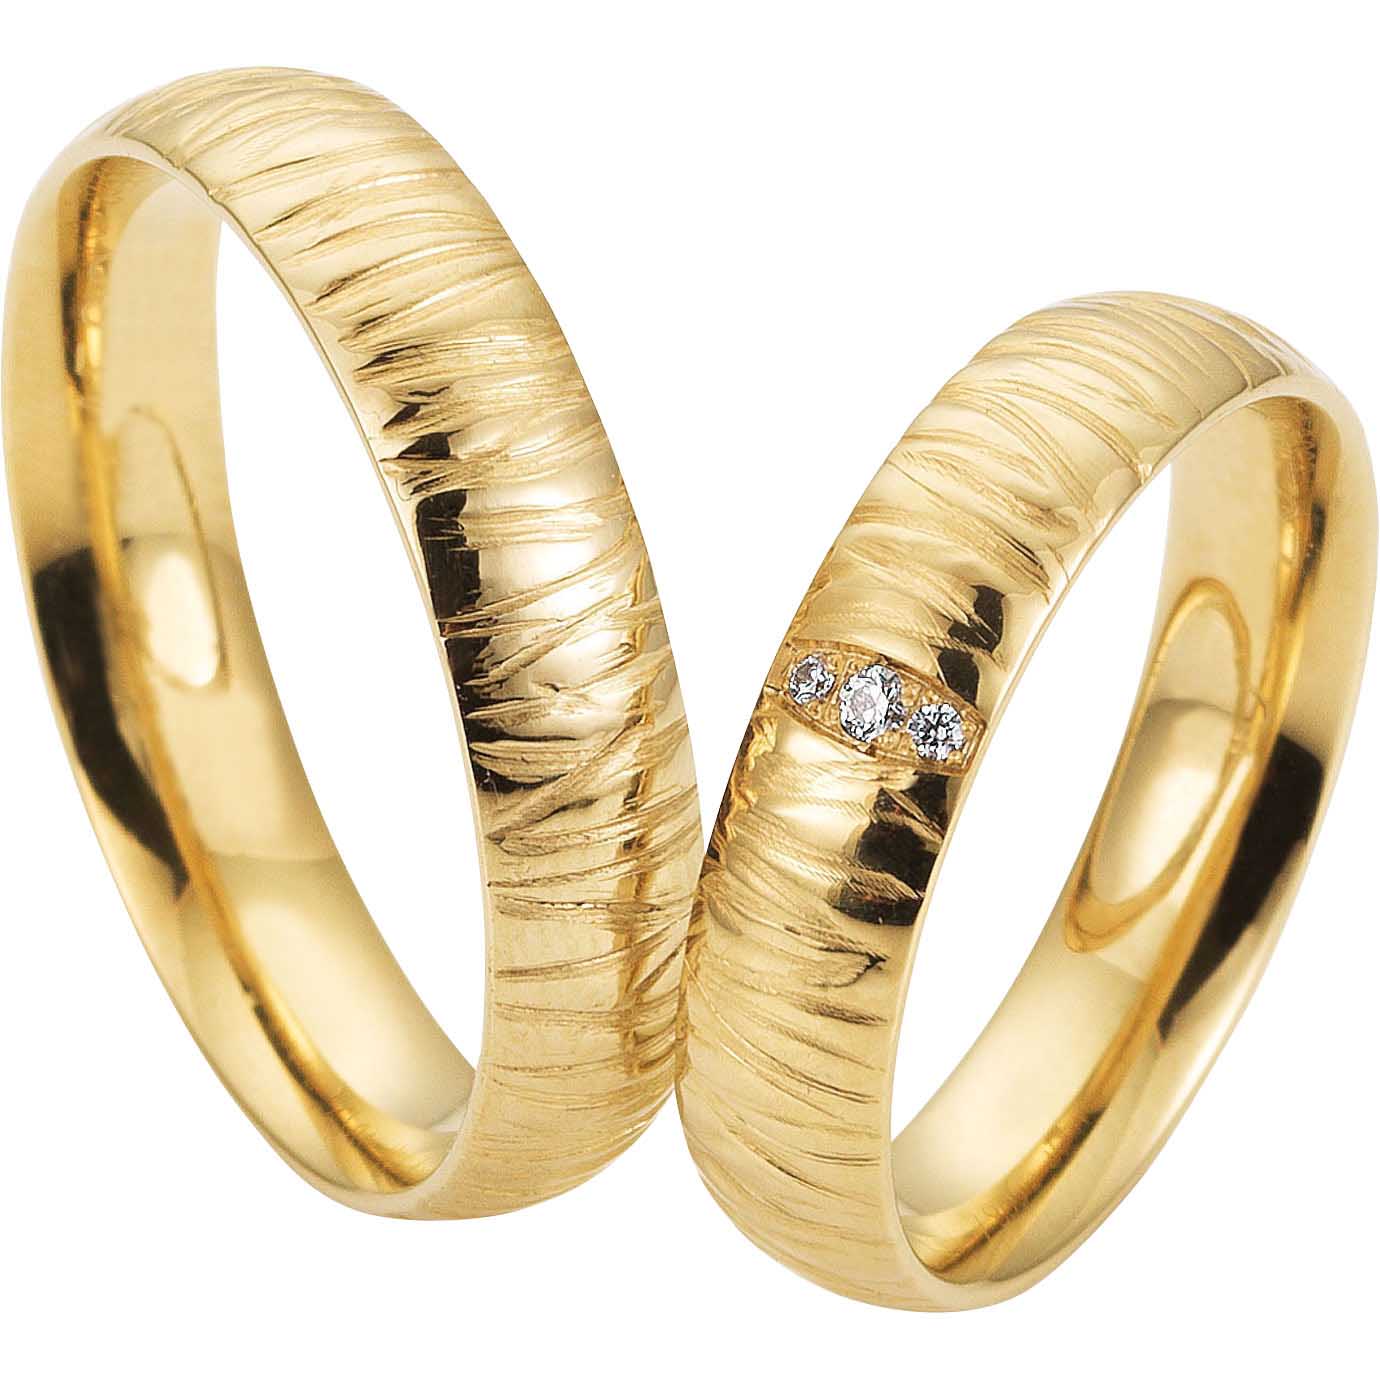 Großhandel mit personalisierten 18 Karat vergoldeten Ringen OEM/ODM-Schmuck China 925 Silberschmuck Lieferant